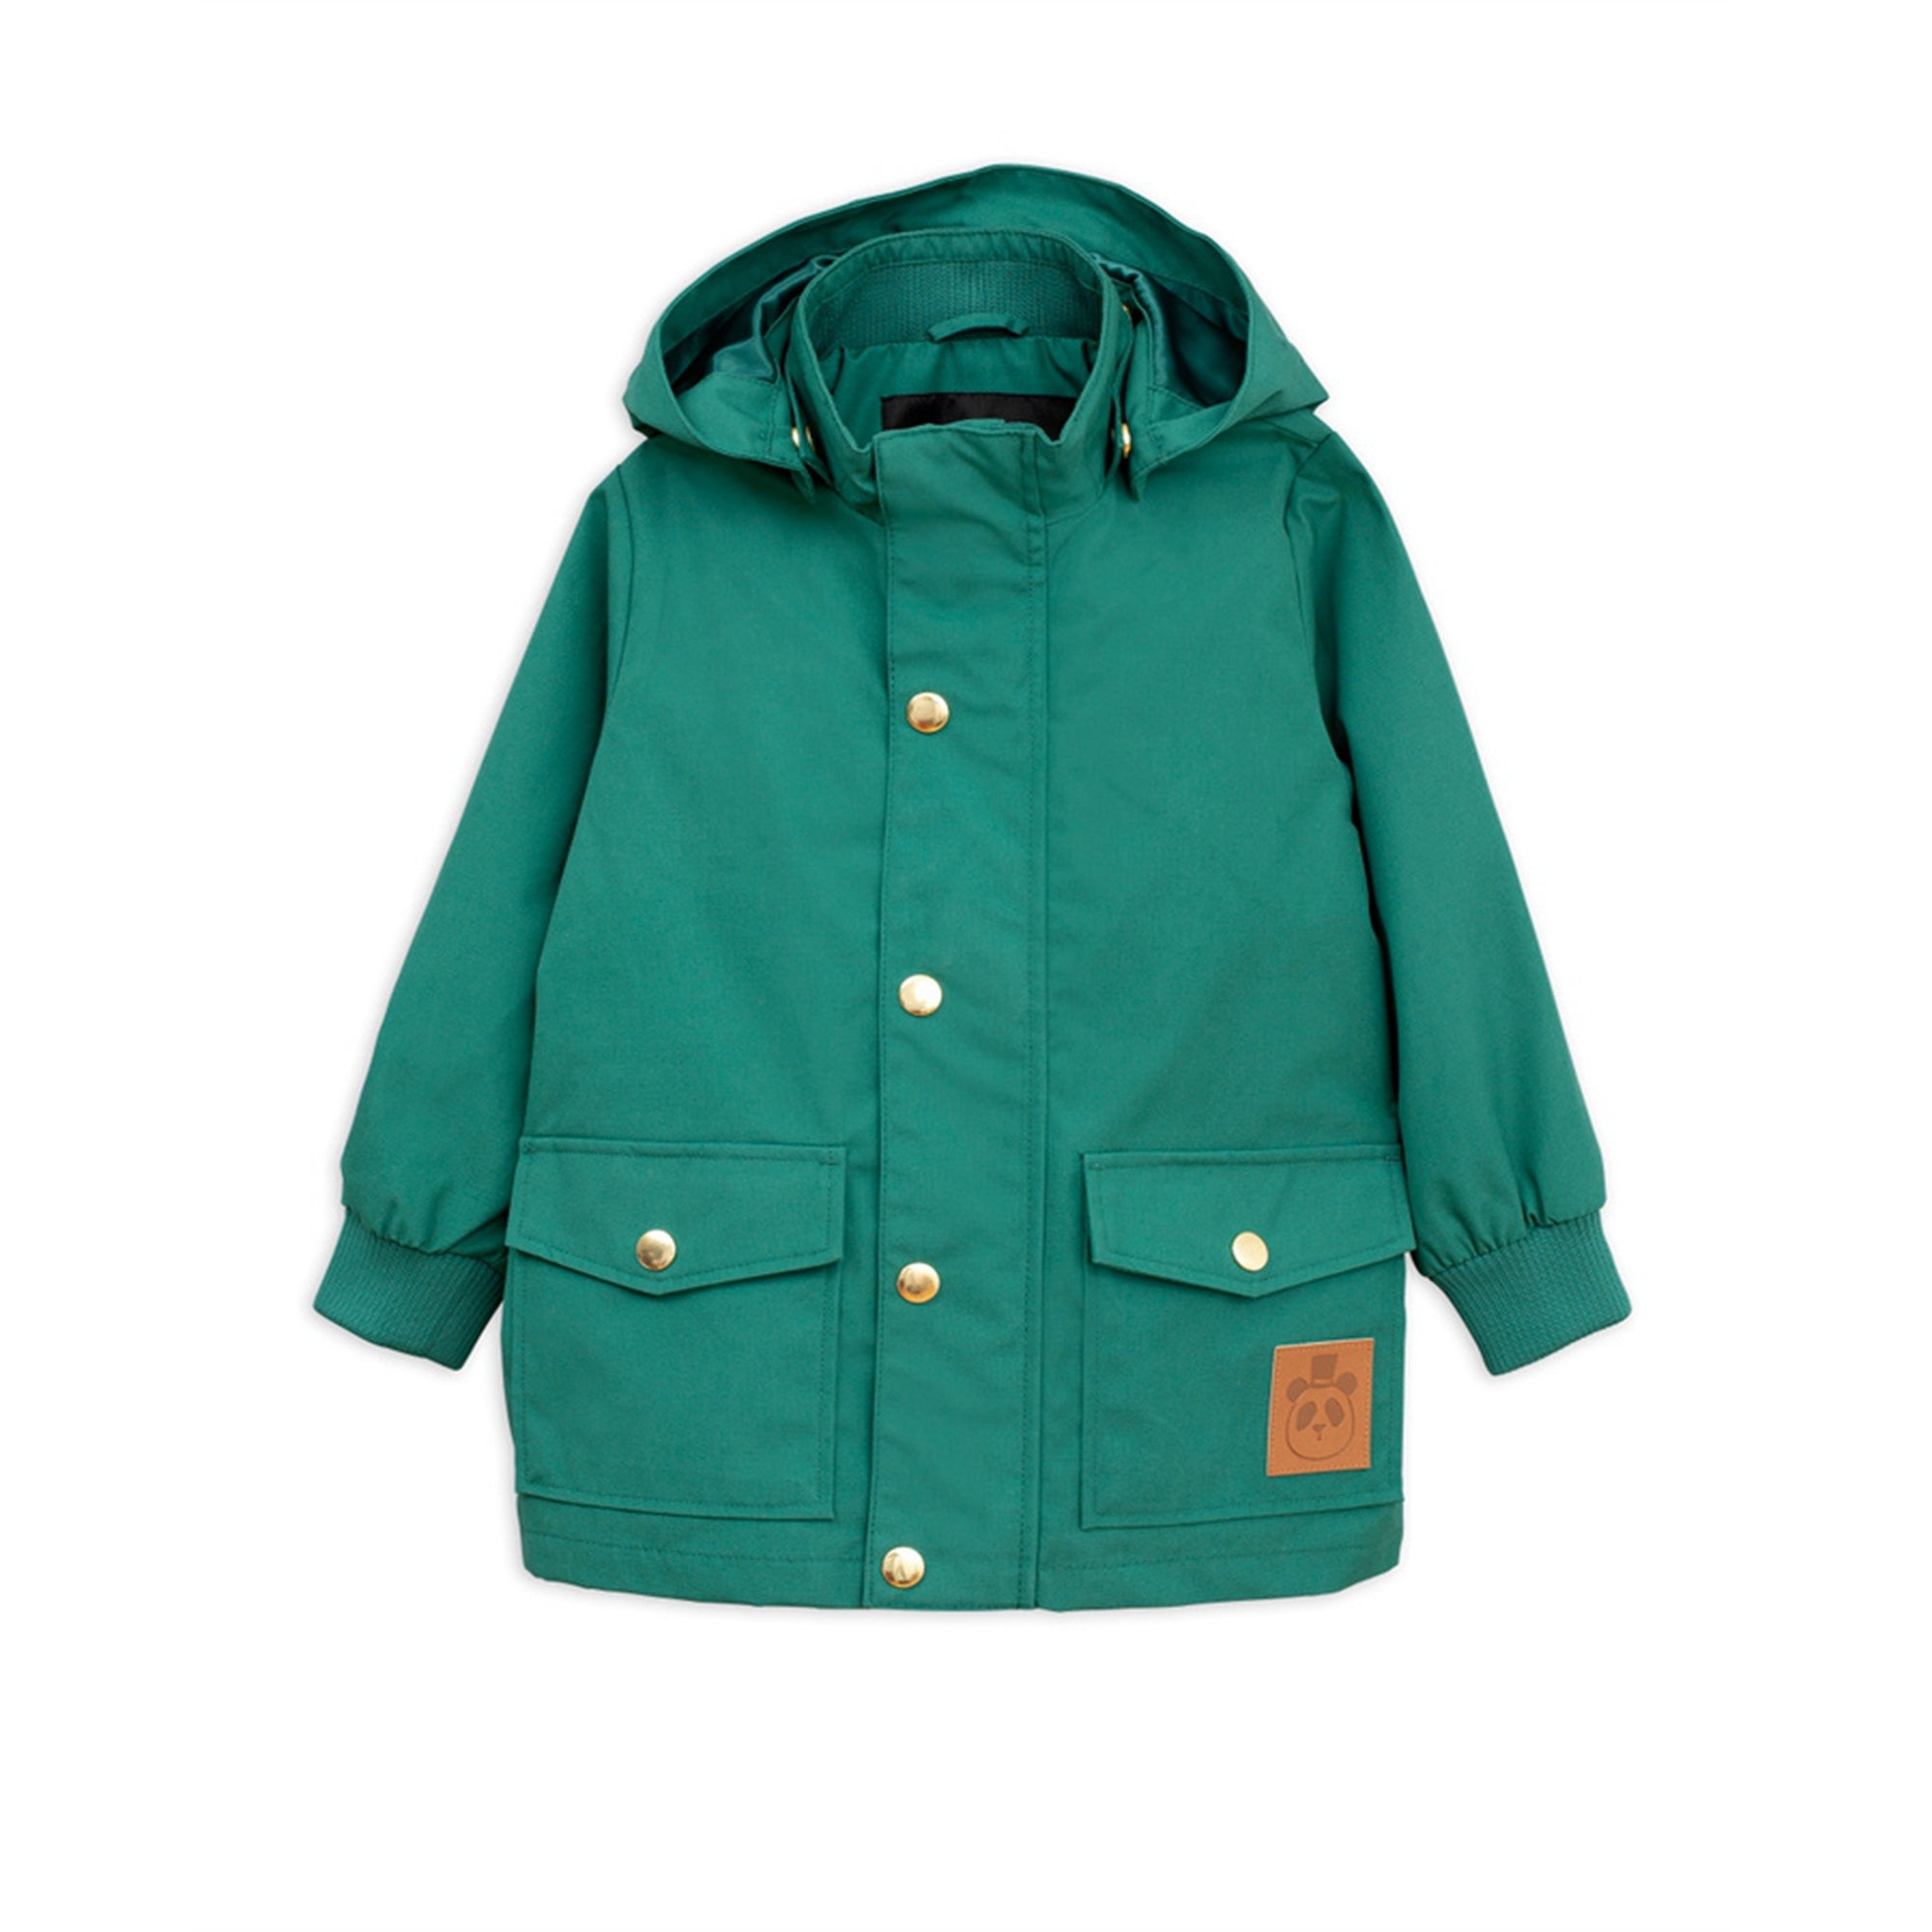 Girls Green Pico Jacket